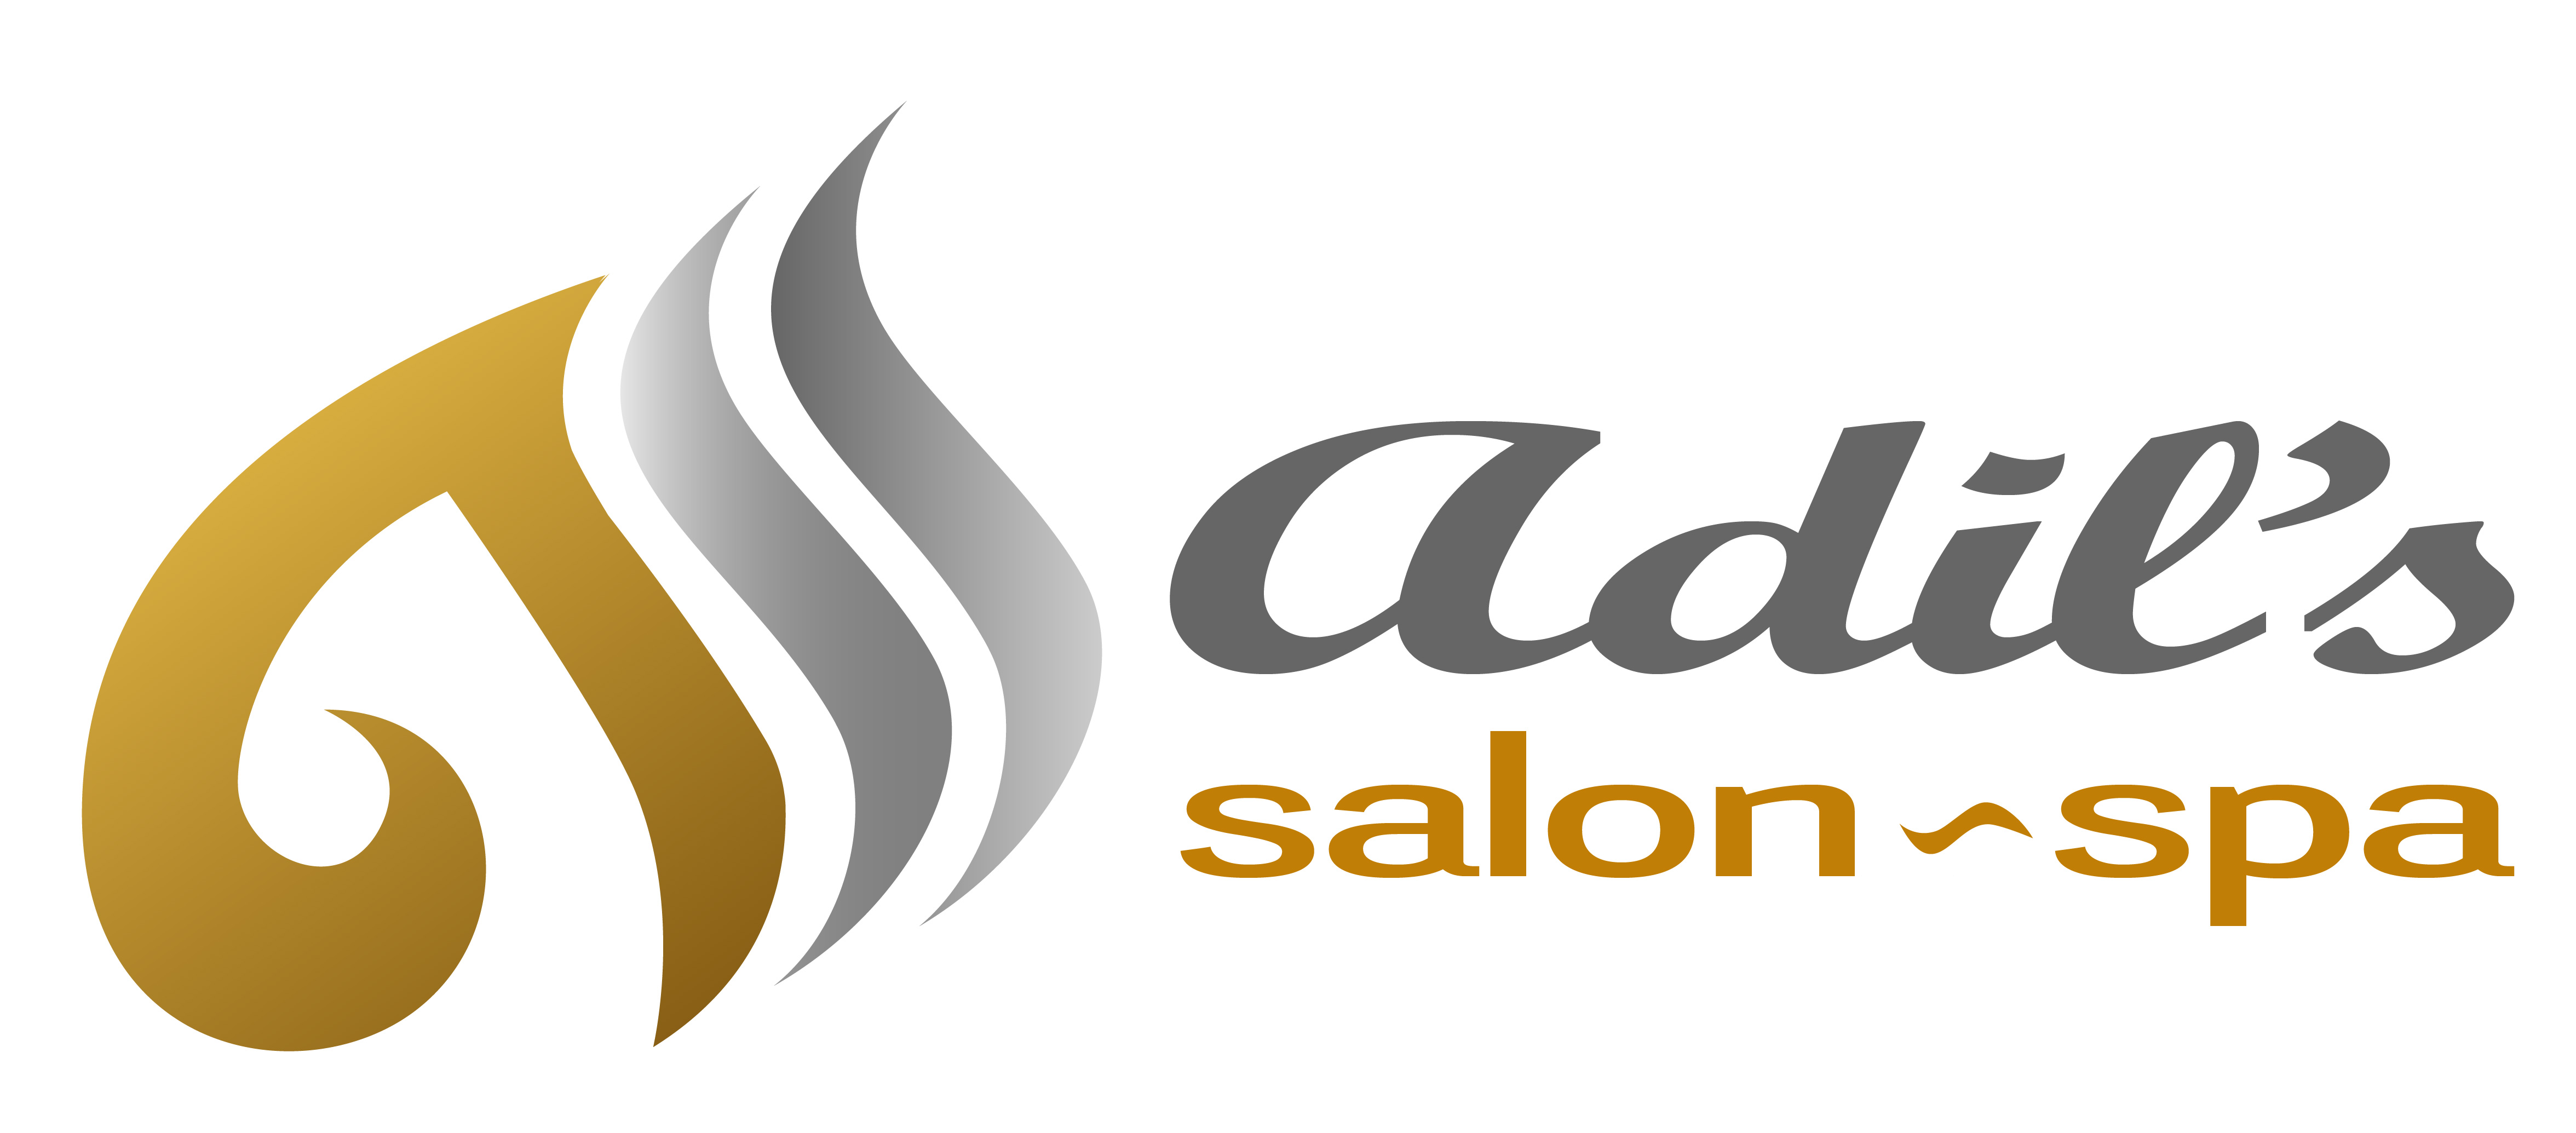 Adil's Salon and Spa